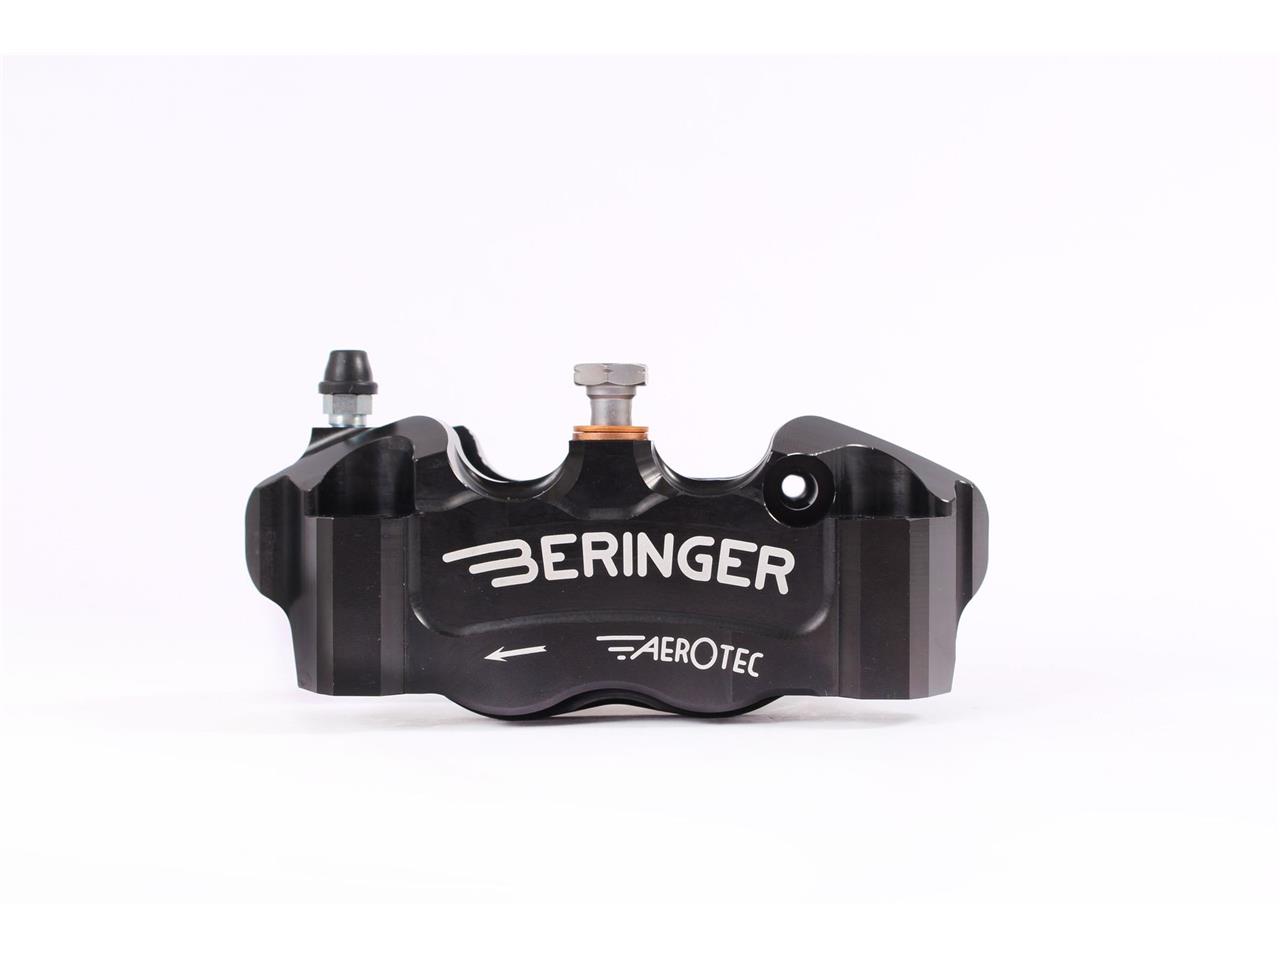 Étrier de frein radial gauche Beringer Aerotec®, 4 pistons Ø32mm, entraxe 100mm, noir